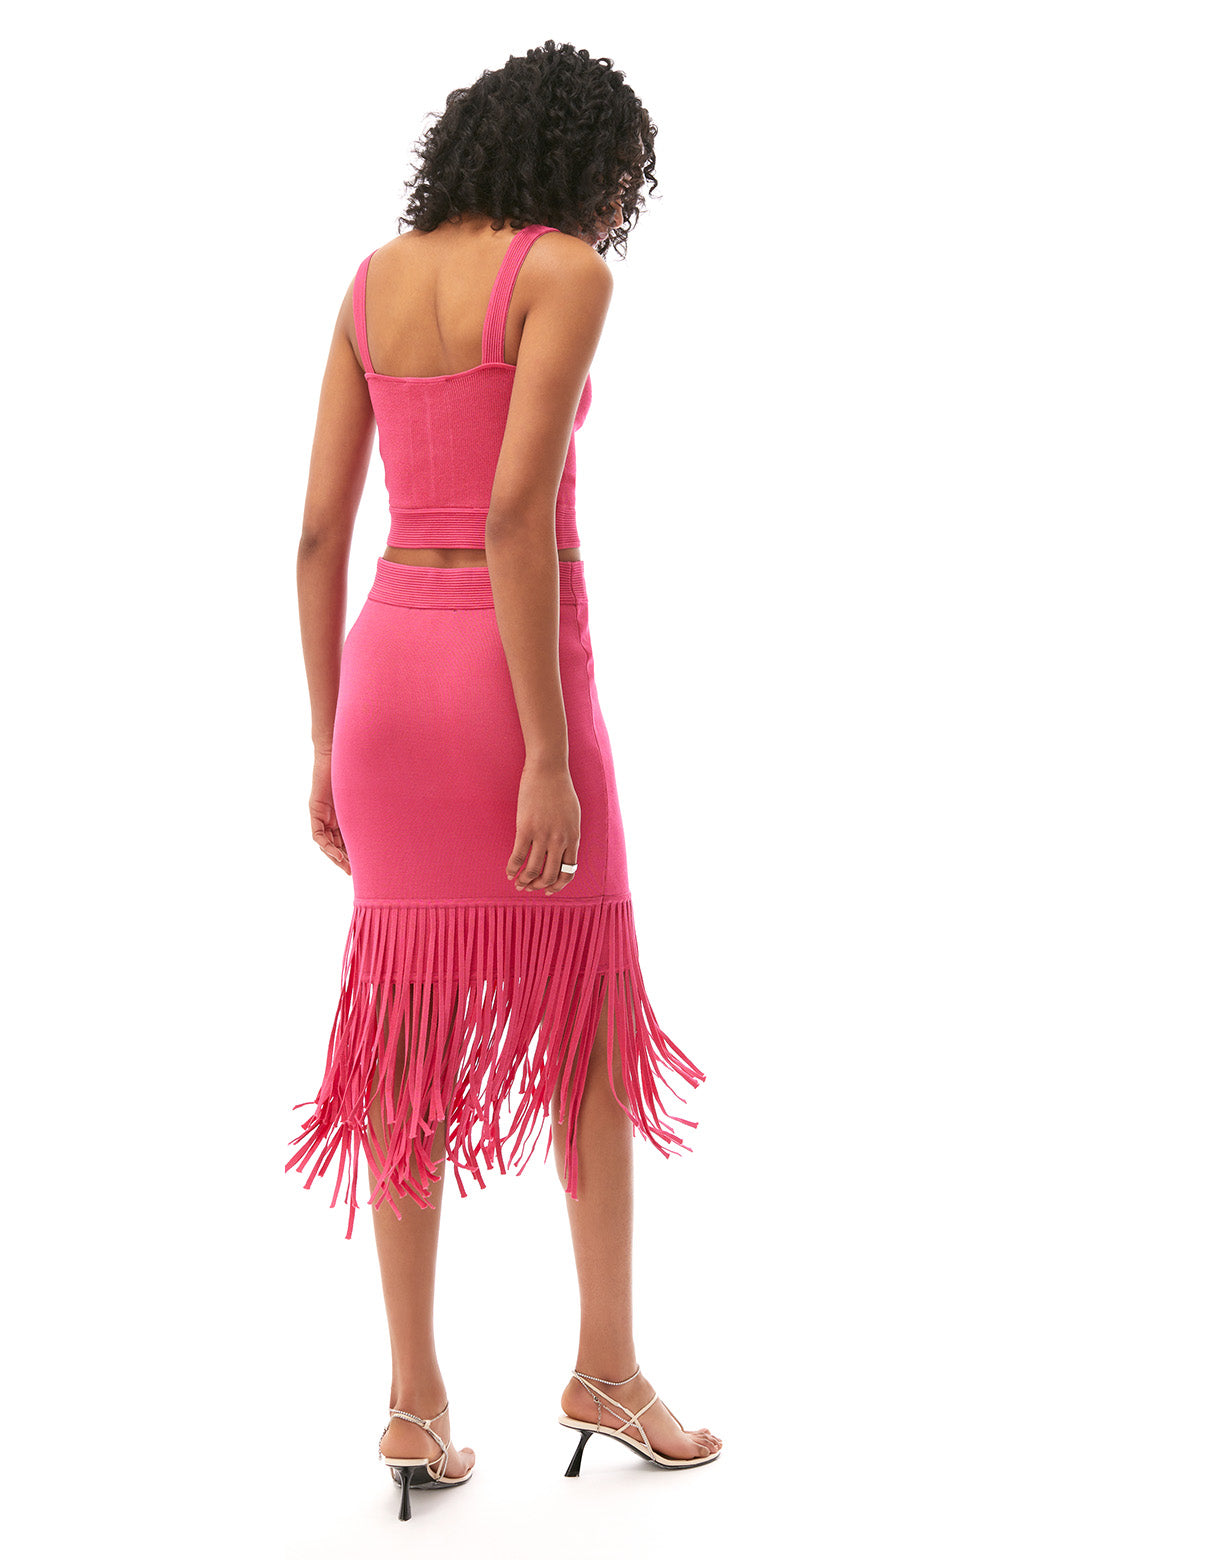 lorna fringe midi skirt hot pink - women's figure flattering designer fashion skirts